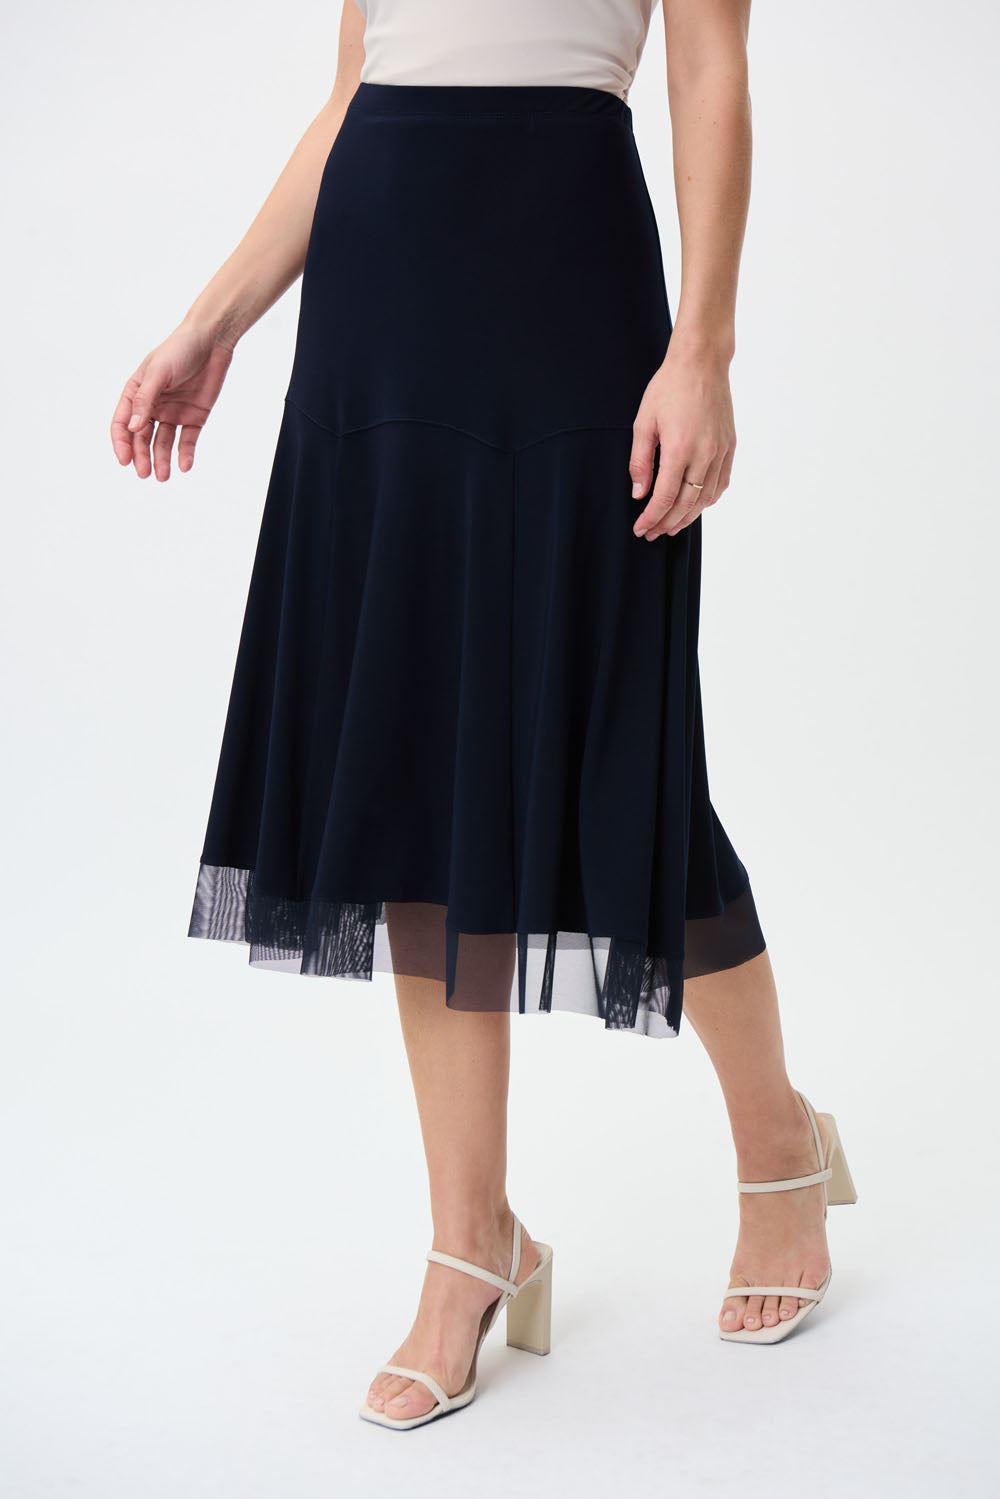 Joseph Ribkoff Midnight Blue Skirt Style 231223